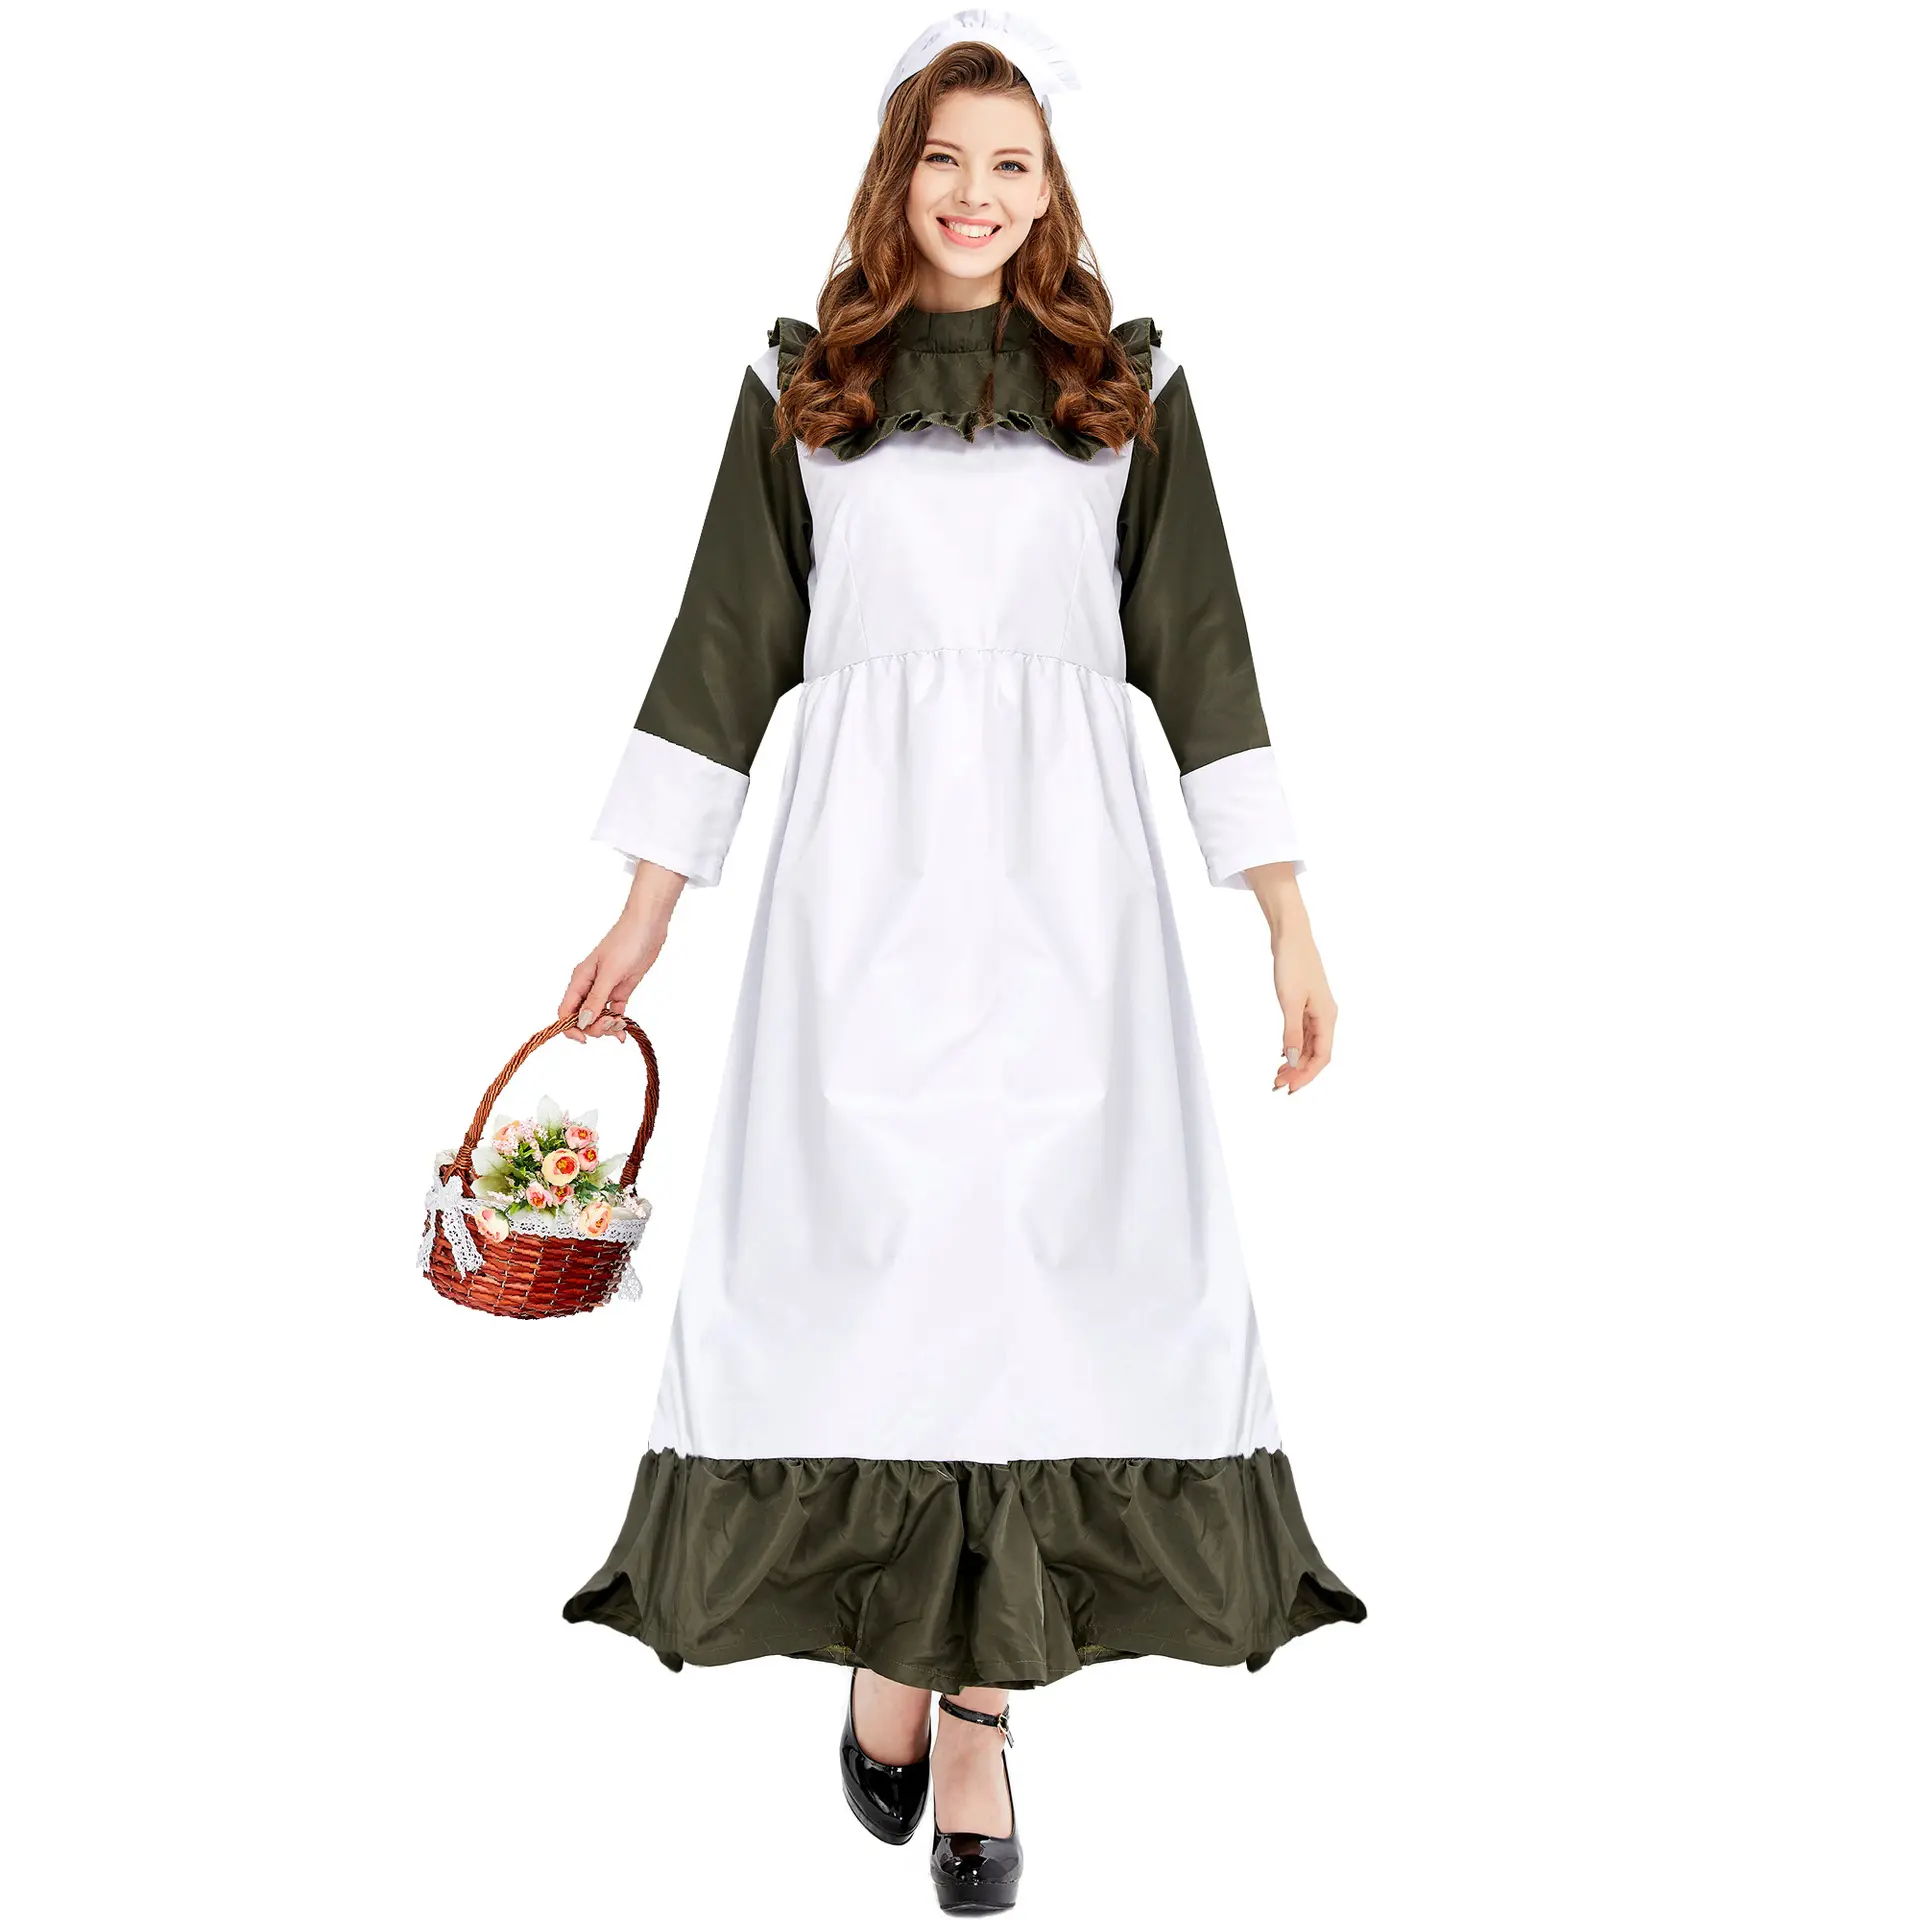 M-XL Halloween costume Long skirt maid costume Oktoberfest Stage show beer costume maid